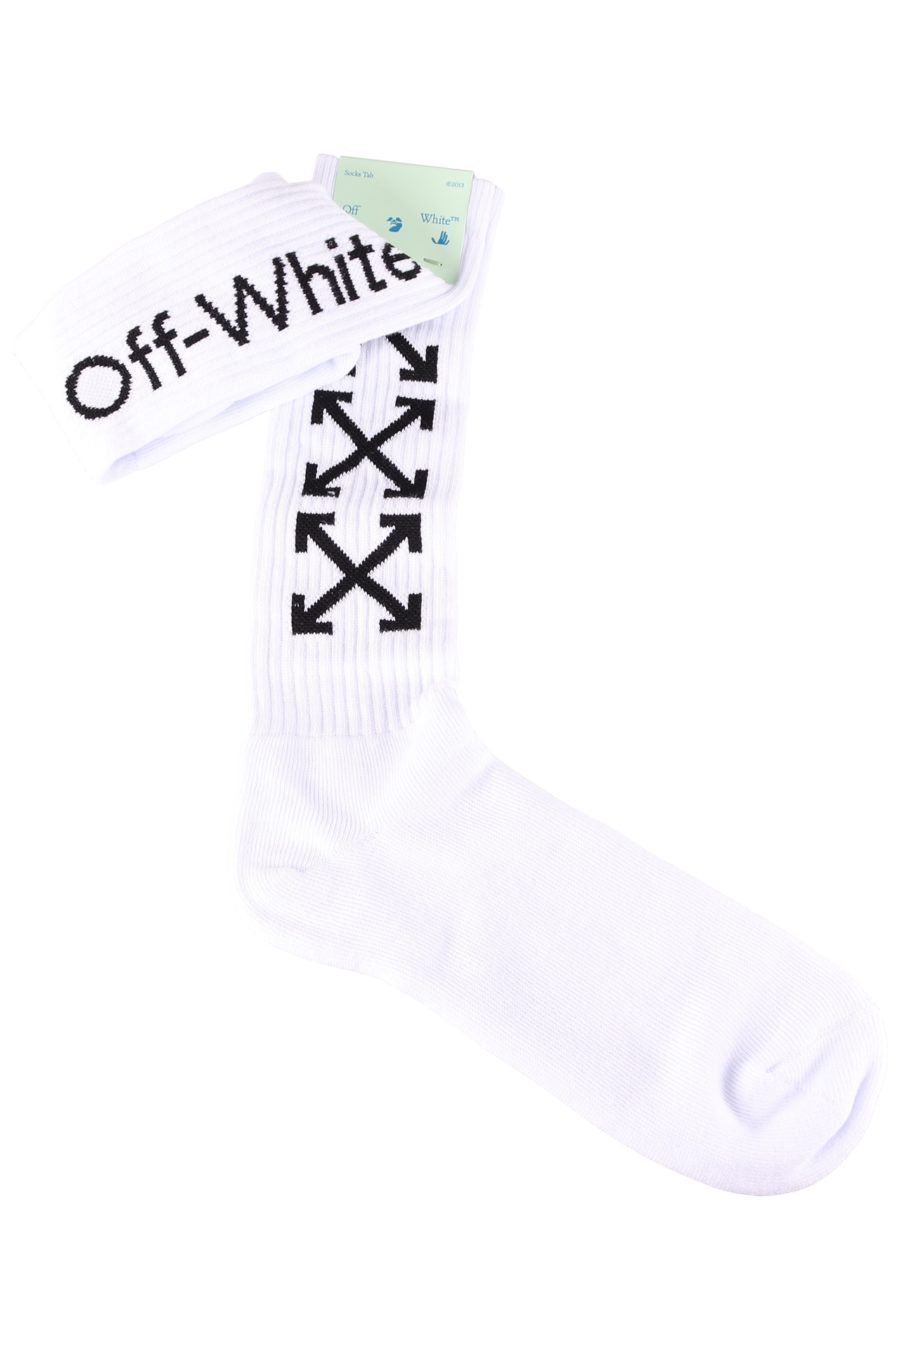 Meias Off-White brancas com setas pretas - c2f5fd8eaeaea1f617c841dad46eff0d3defea87dd